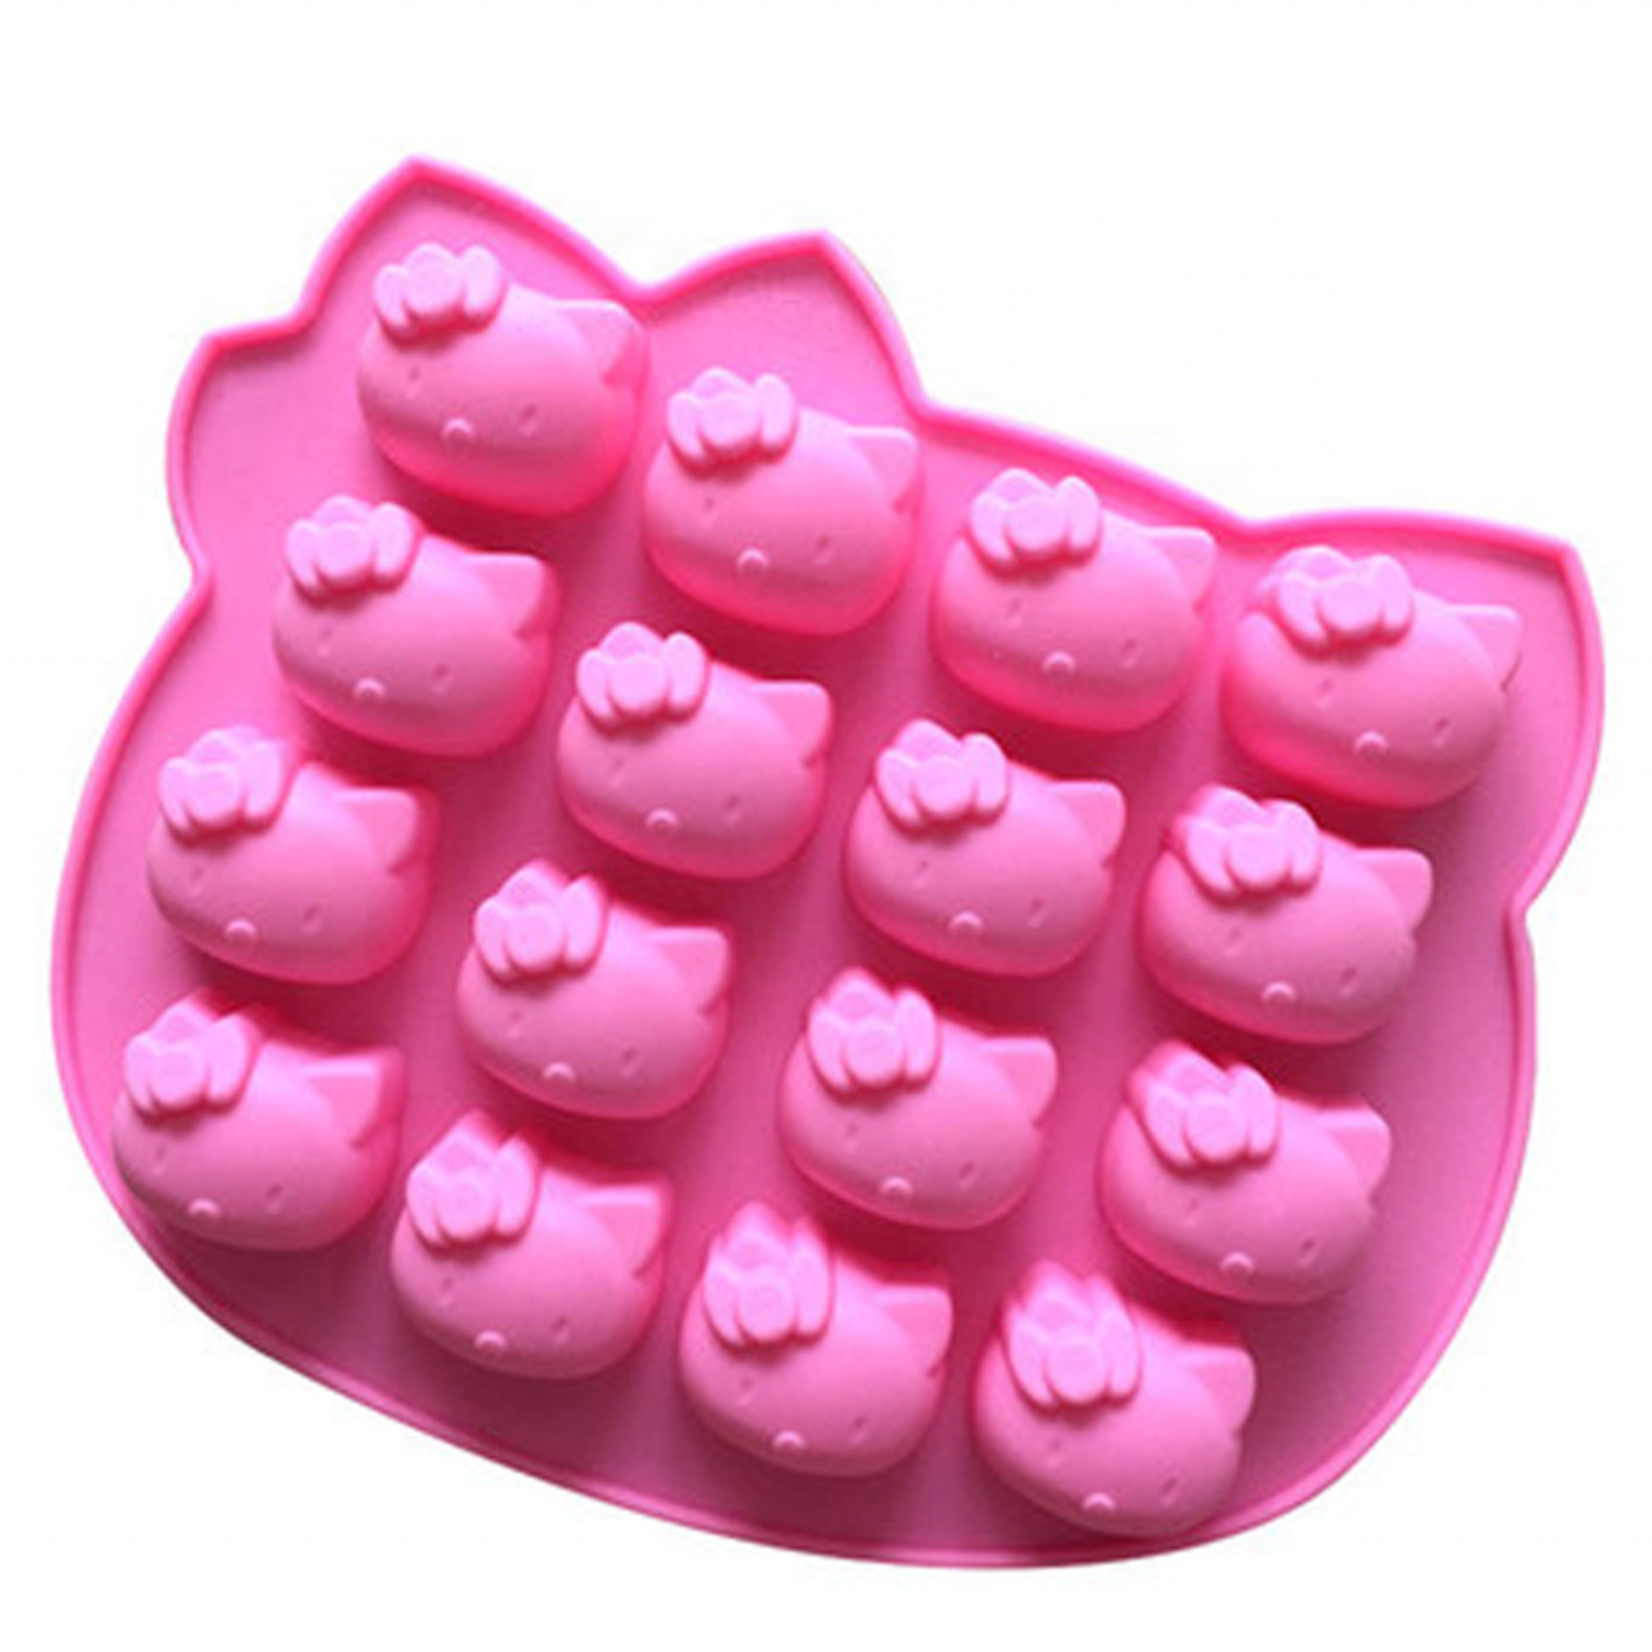 https://cdn.shoplightspeed.com/shops/627977/files/60234555/1652x1652x2/silicone-pink-hello-kitty-mold.jpg